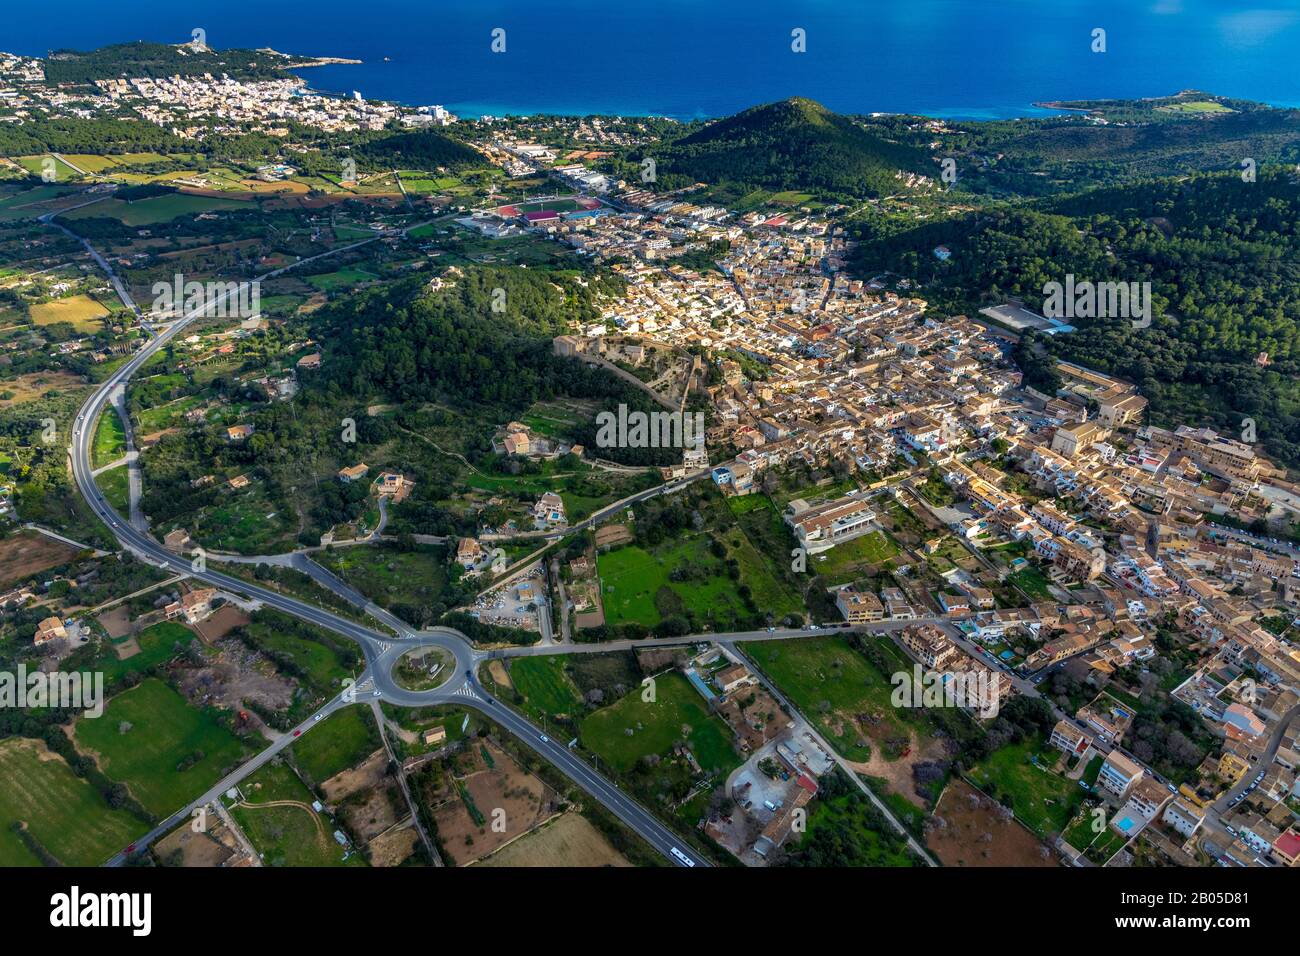 roundabout at Capdepera, 09.01.2020, aerial view, Spain, Balearic Islands, Majorca, Capdepera Stock Photo